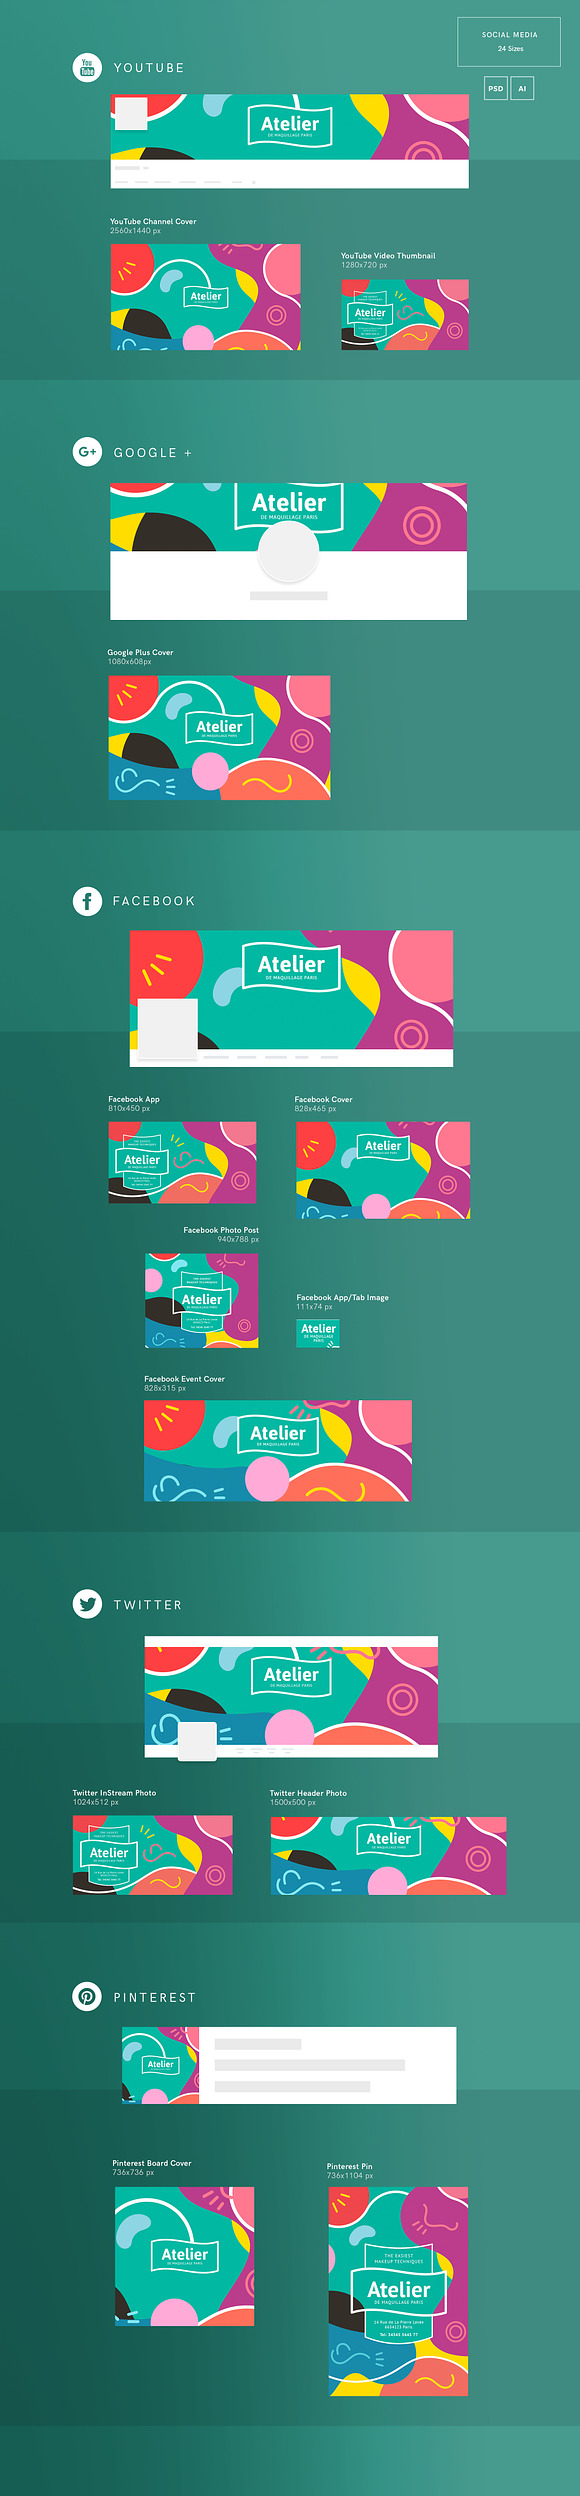 Branding Pack | Atelier in Branding Mockups - product preview 7